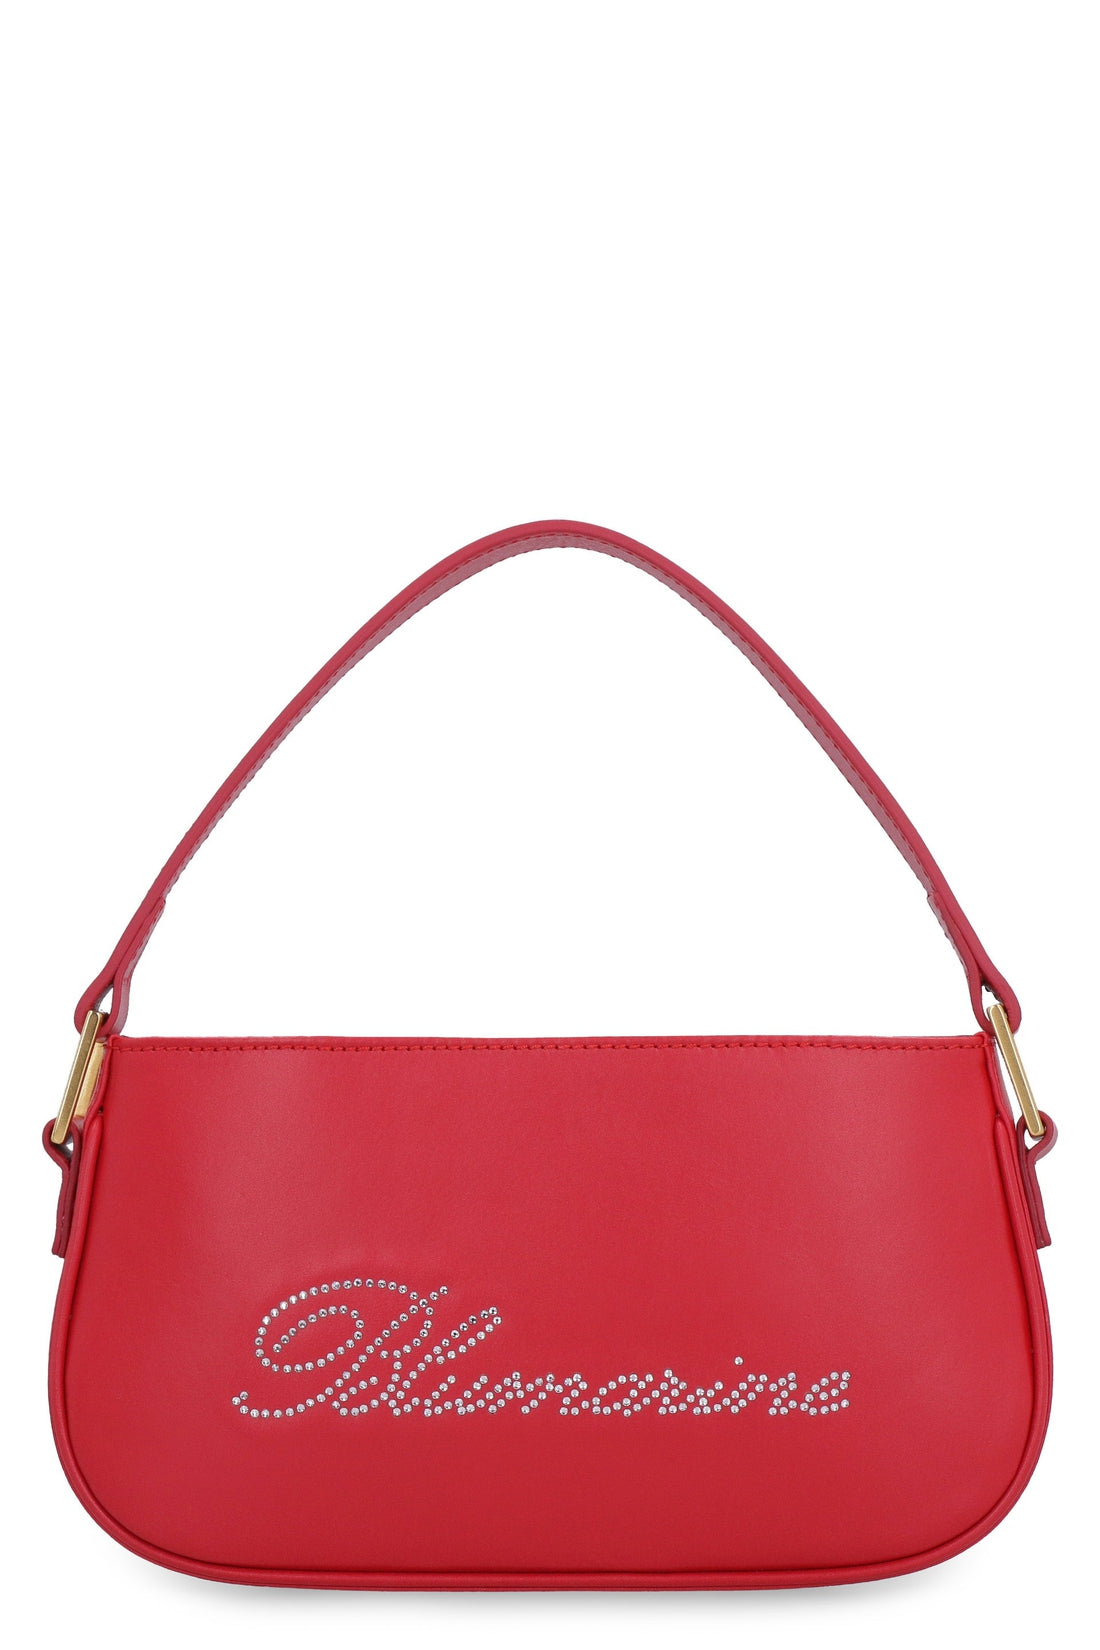 Blumarine-OUTLET-SALE-Logo print leather handbag-ARCHIVIST